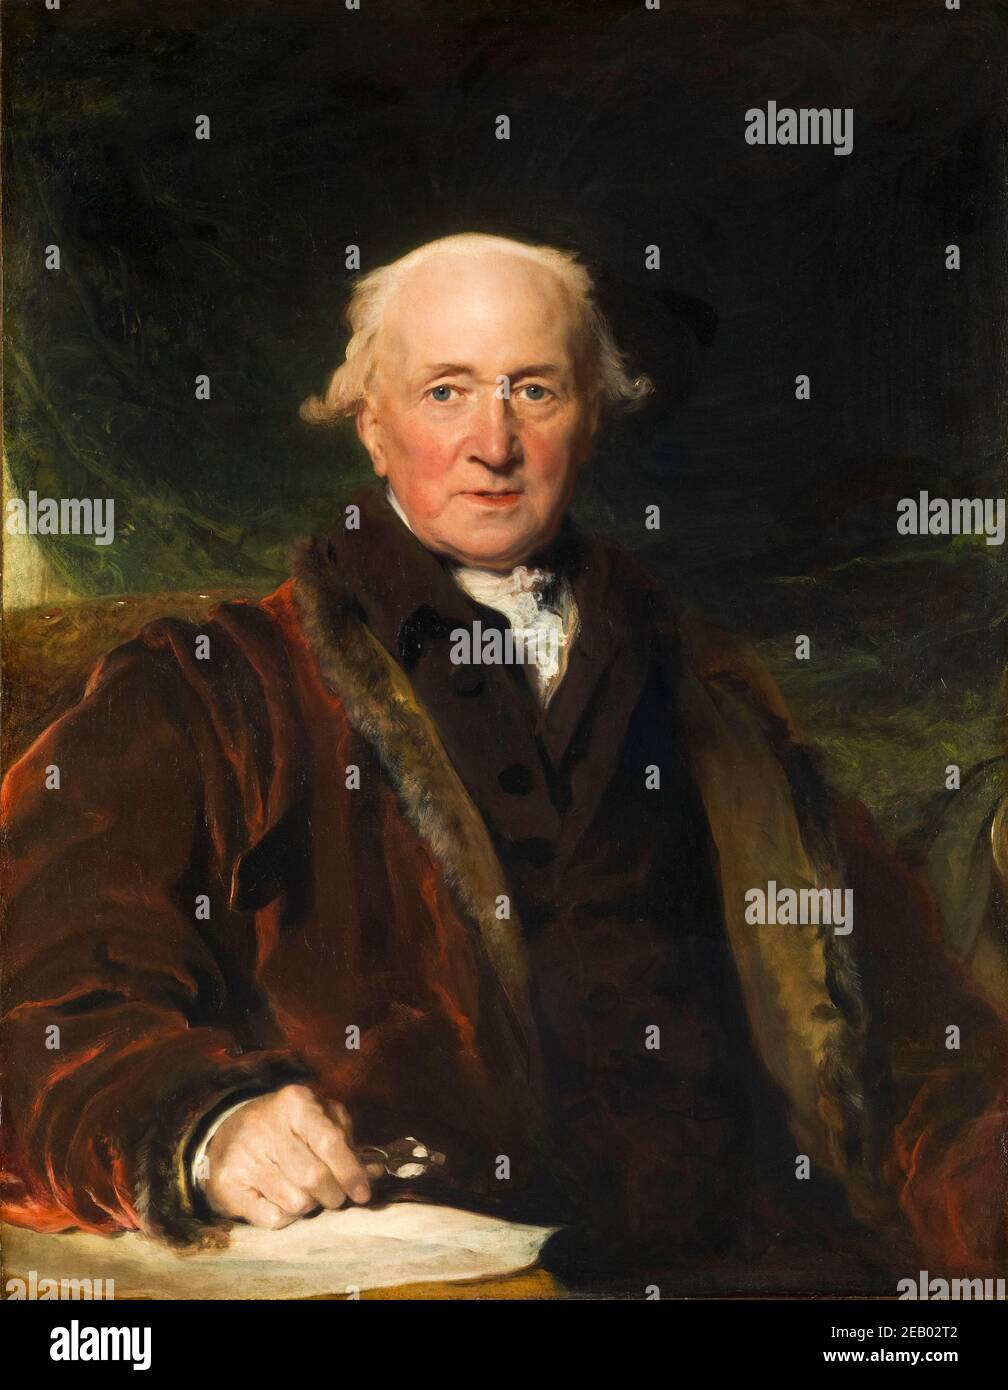 Sir Thomas Lawrence, John Julius Angerstein (1736–1823), collectionneur d'art, Lloyds Chairman, portrait painting, vers 1828 Banque D'Images